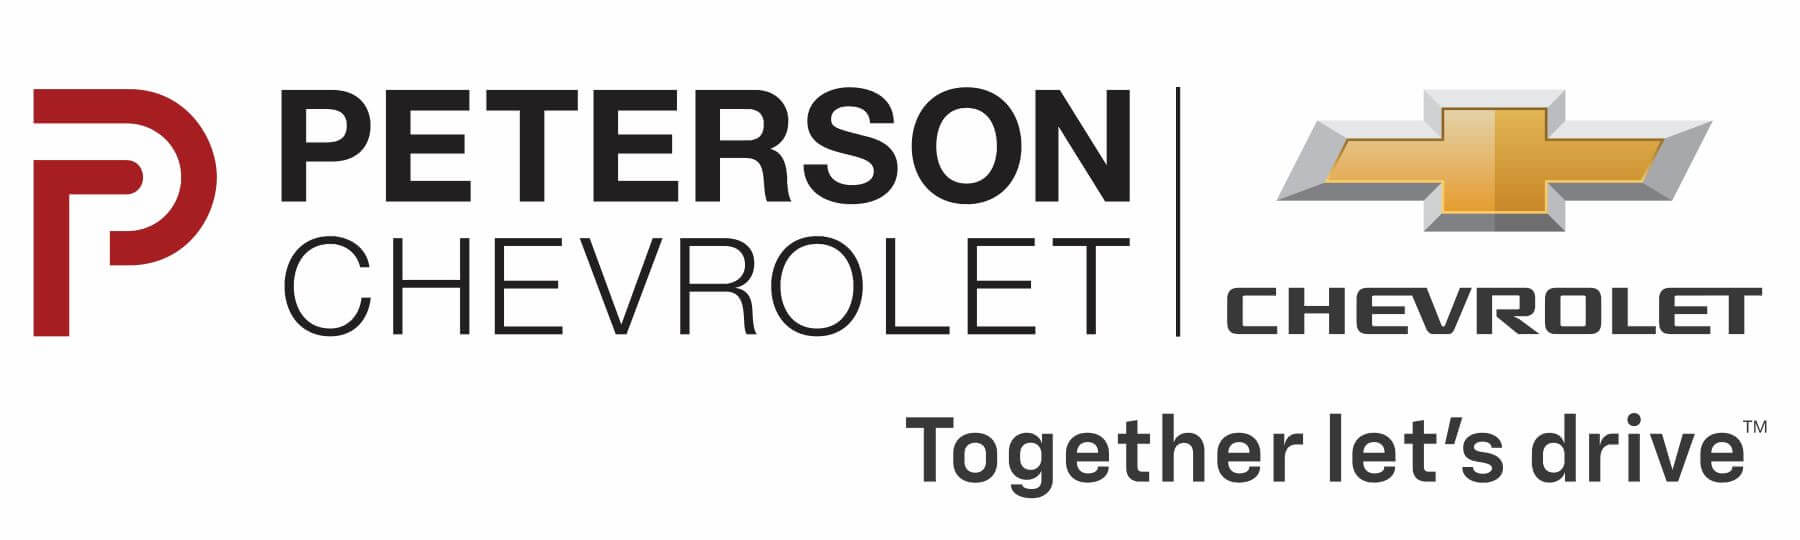 Peterson Chevrolet logo.